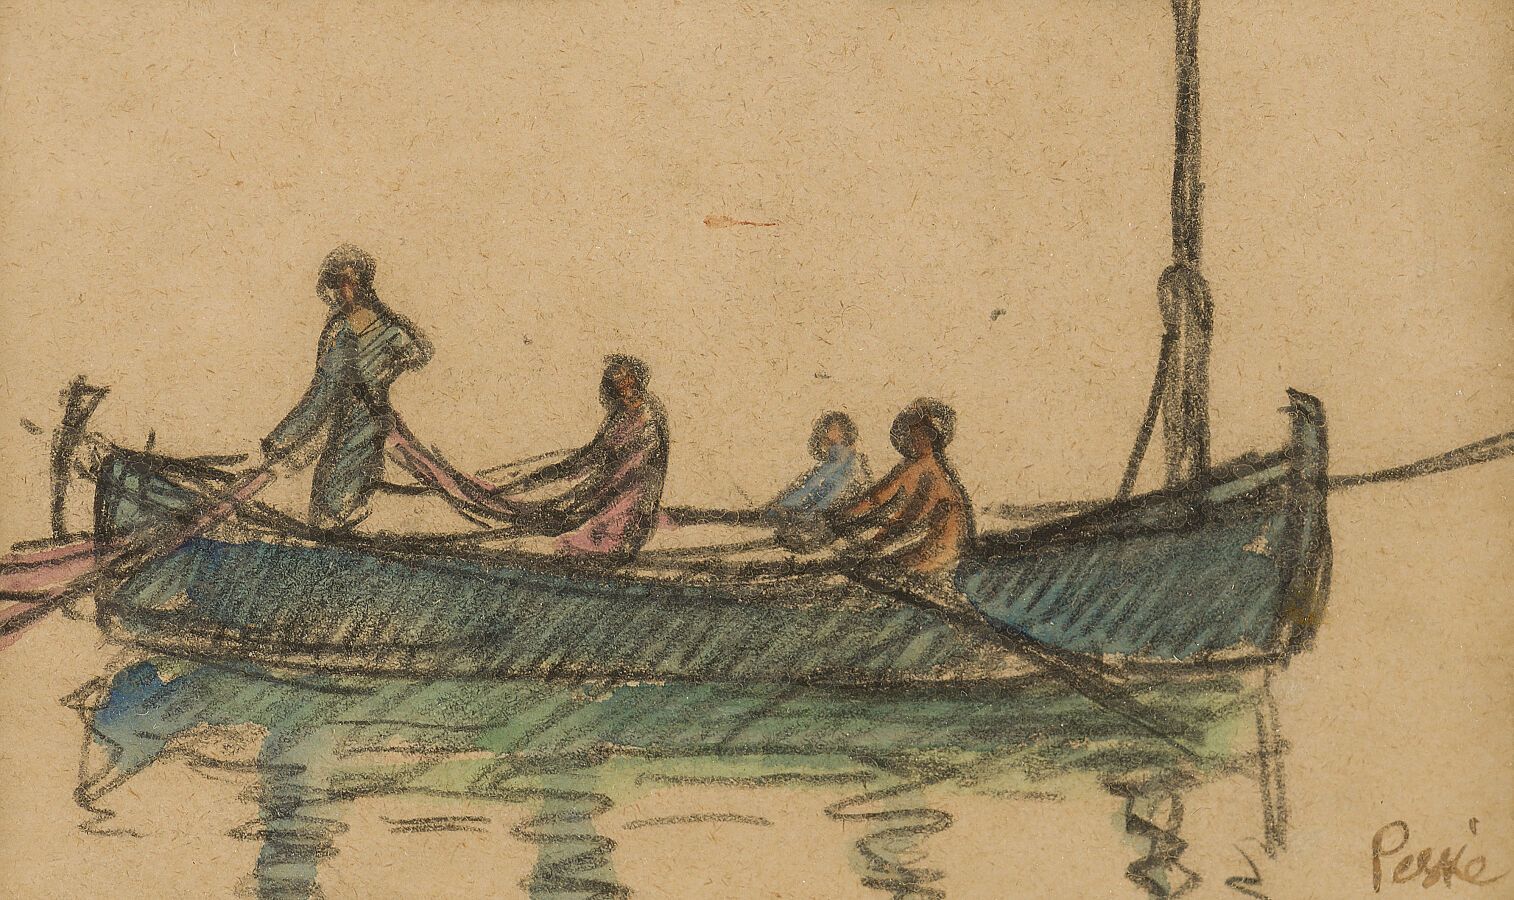 Null Jean PESKÉ (1870-1949)
Das Boot
Aquarell auf Bleistiftstrichen, unten recht&hellip;